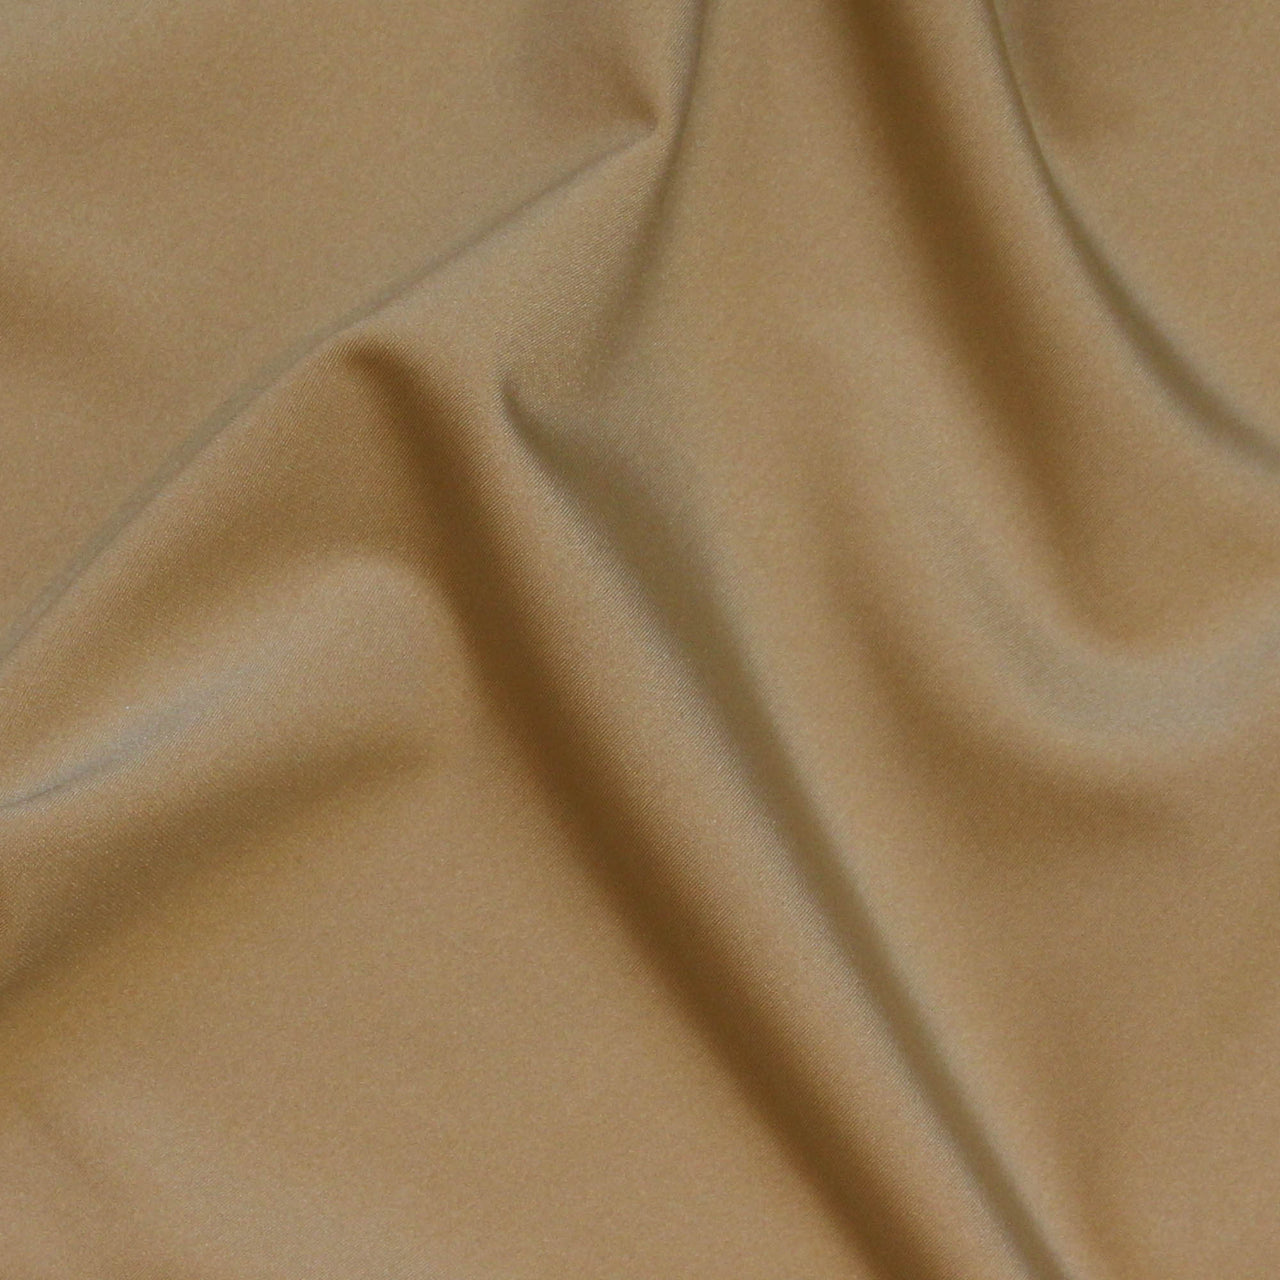 Skin / Flesh / Nude - Nylon Spandex Fabric - 4 Way All Way Stretch Superior Quality - Leotards, Dancewear